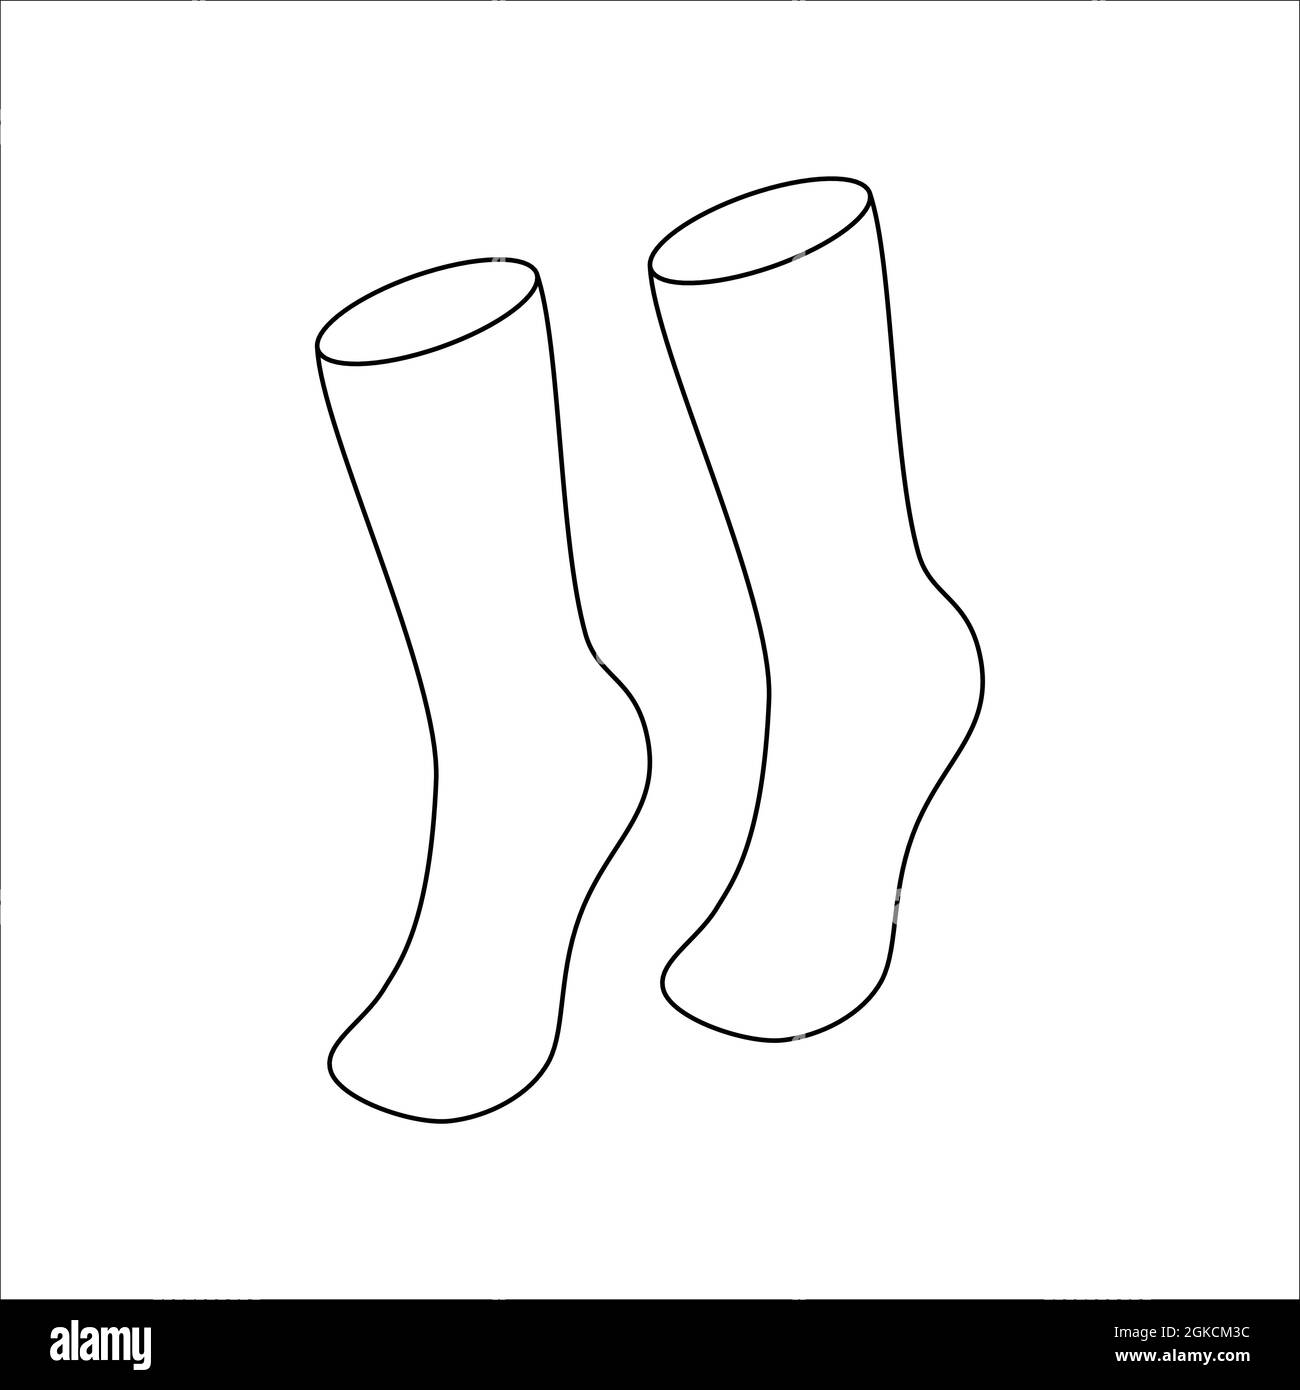 Doodle socks set design. Winter vector illustration isolated on white background. Stock Vector